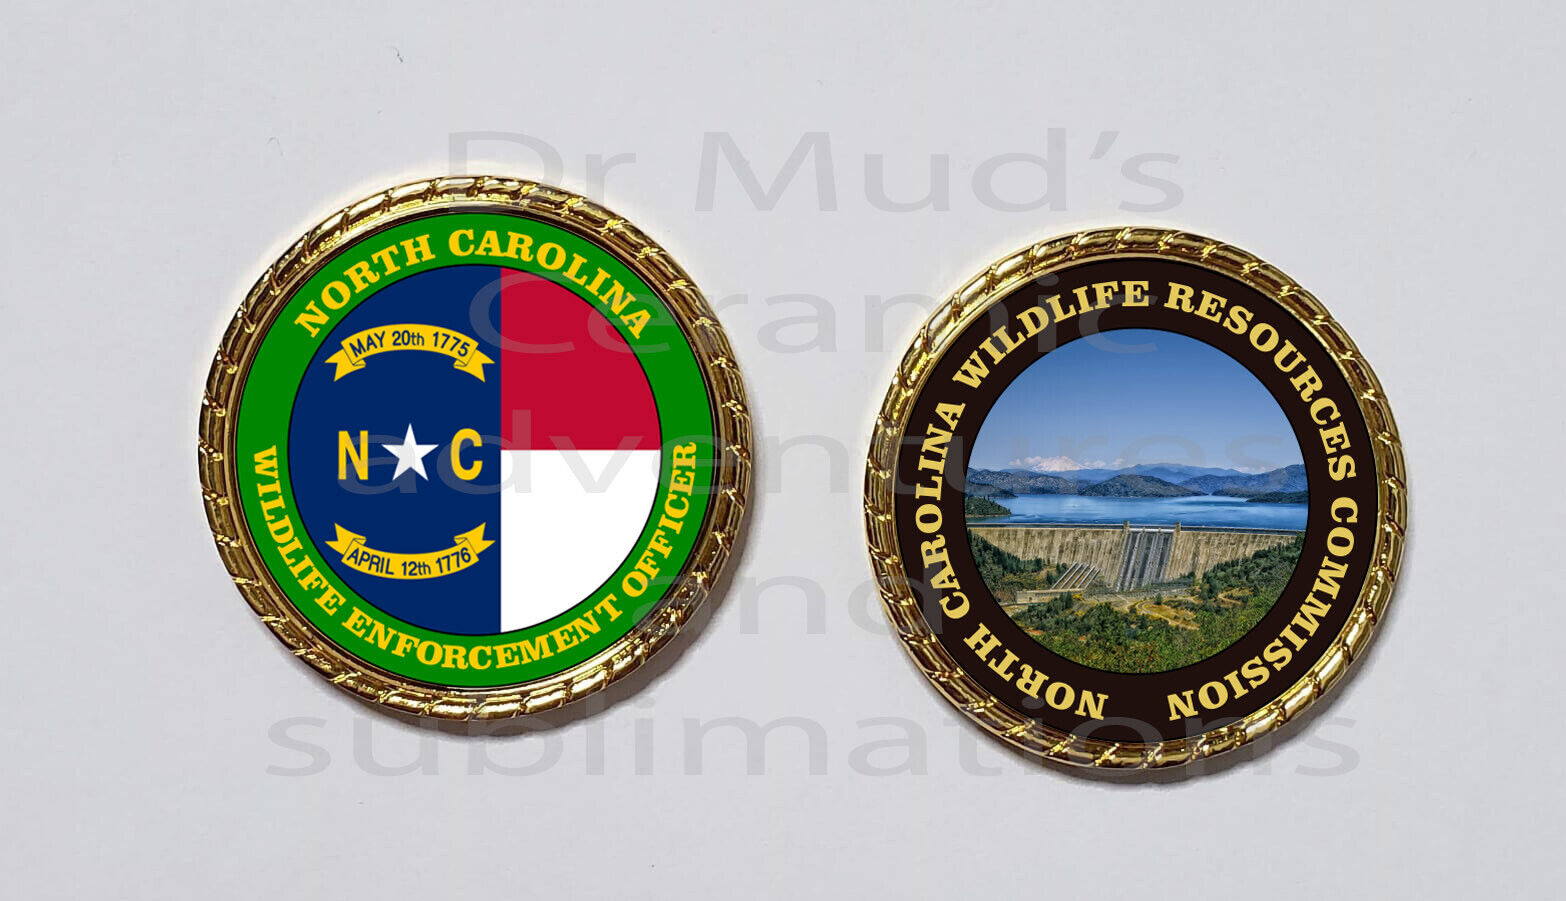 NORTH CAROLINA Wildlife Enforcement Officer  game warden collector novelty coin